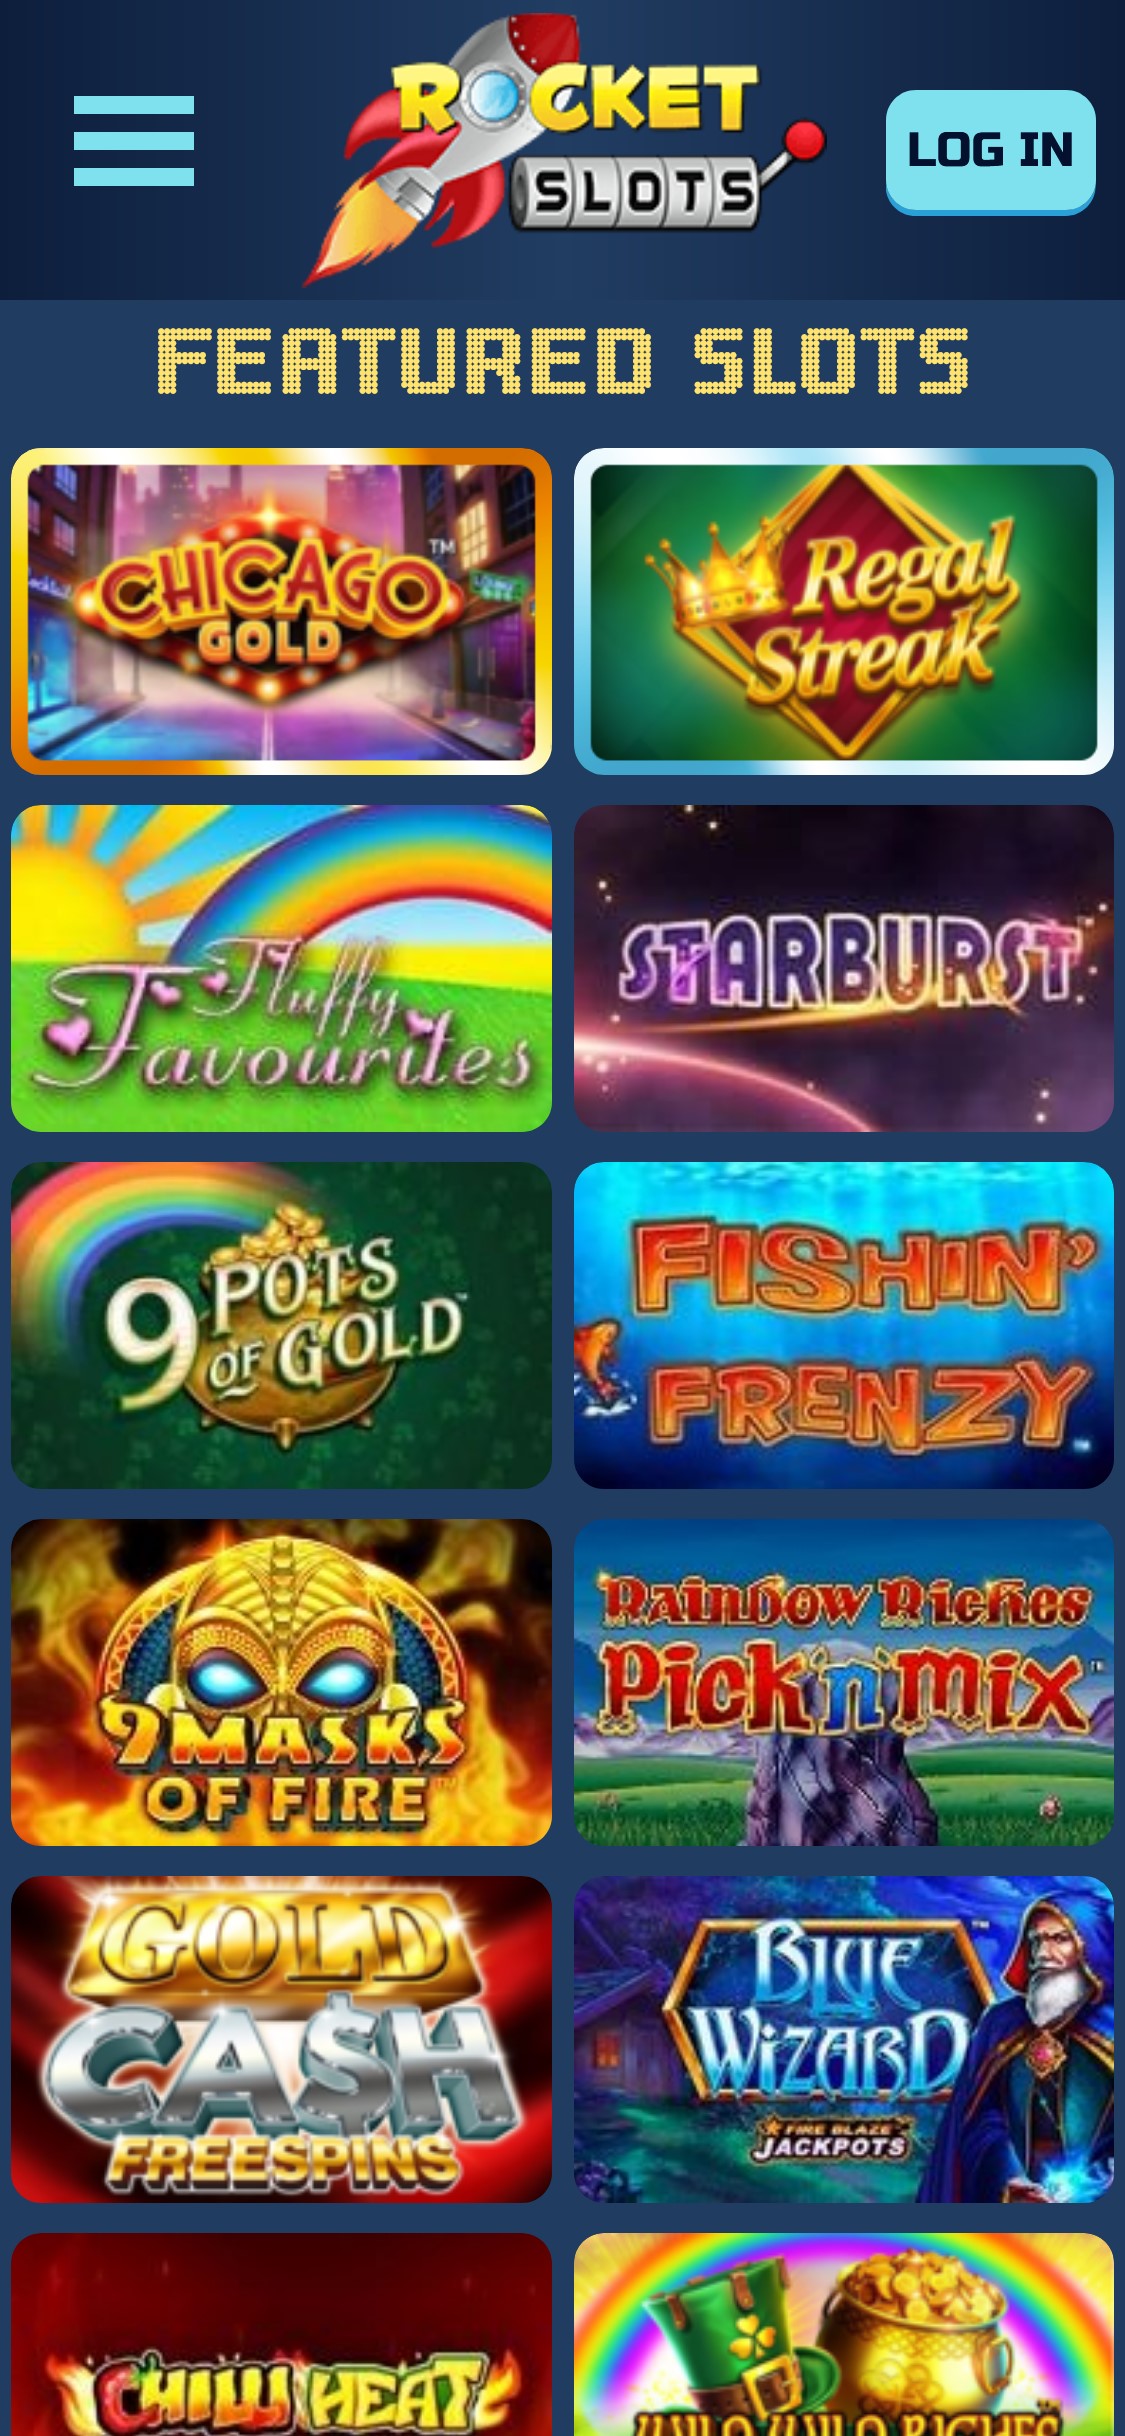 Rocket Slots Casino Mobile Games Review